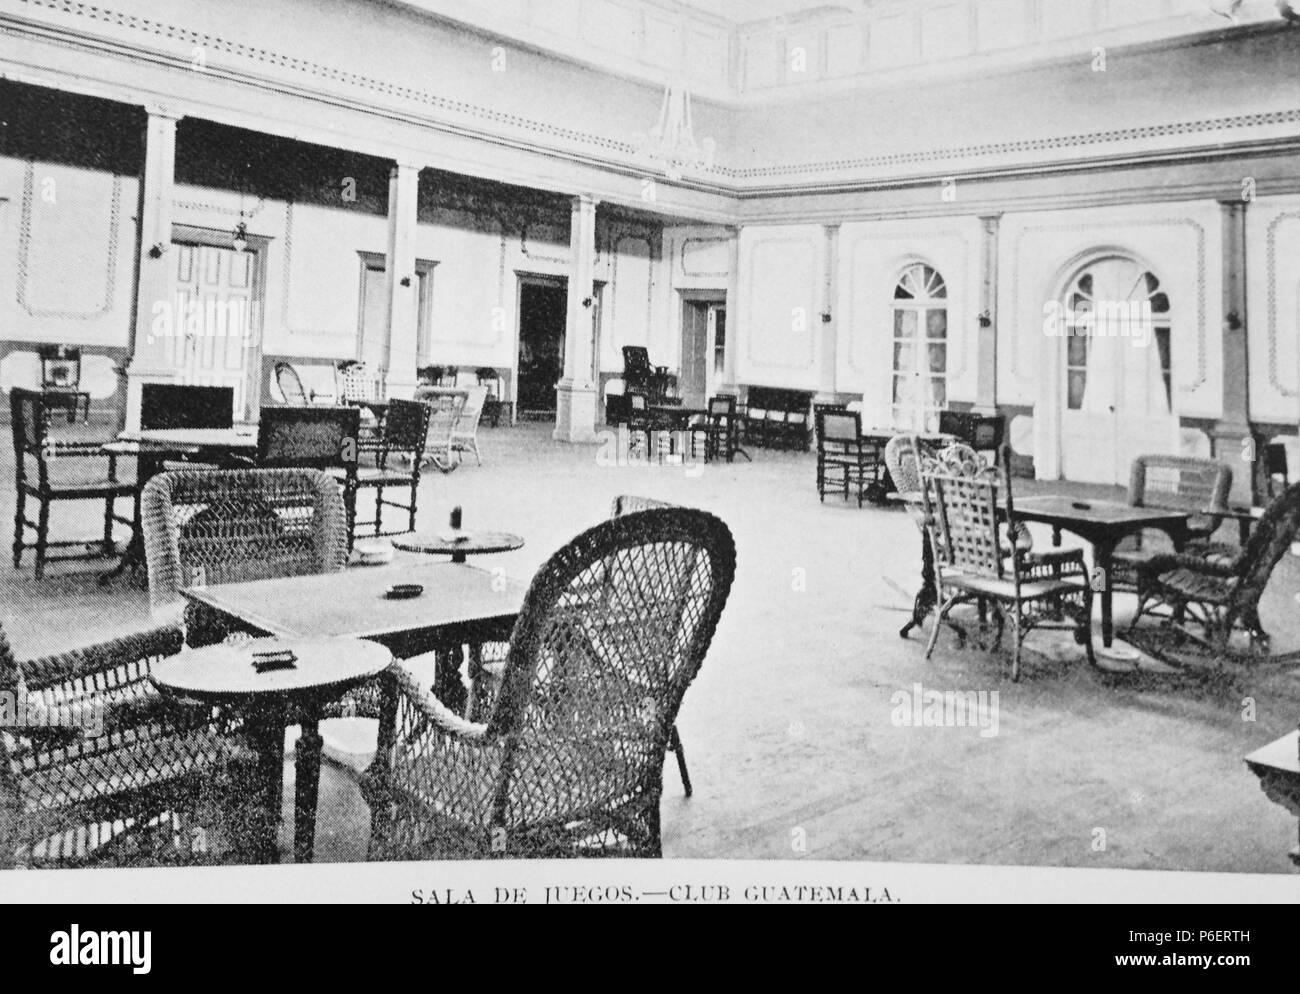 Español: Salón de lectura del Club Guatemala en 1898. 1898 73  SalonLecturaClubGuatemala1898 Stock Photo - Alamy